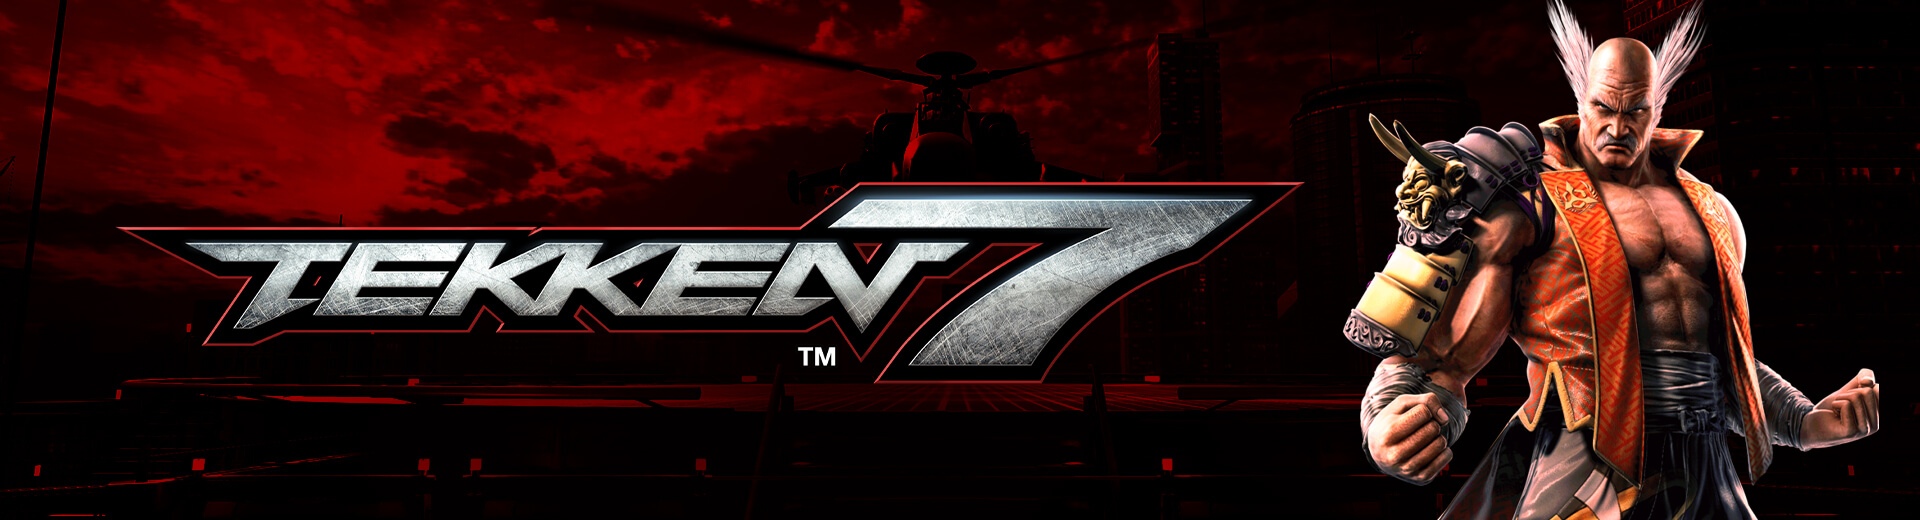 Tekken 7 @ The Cave Rebooted #1